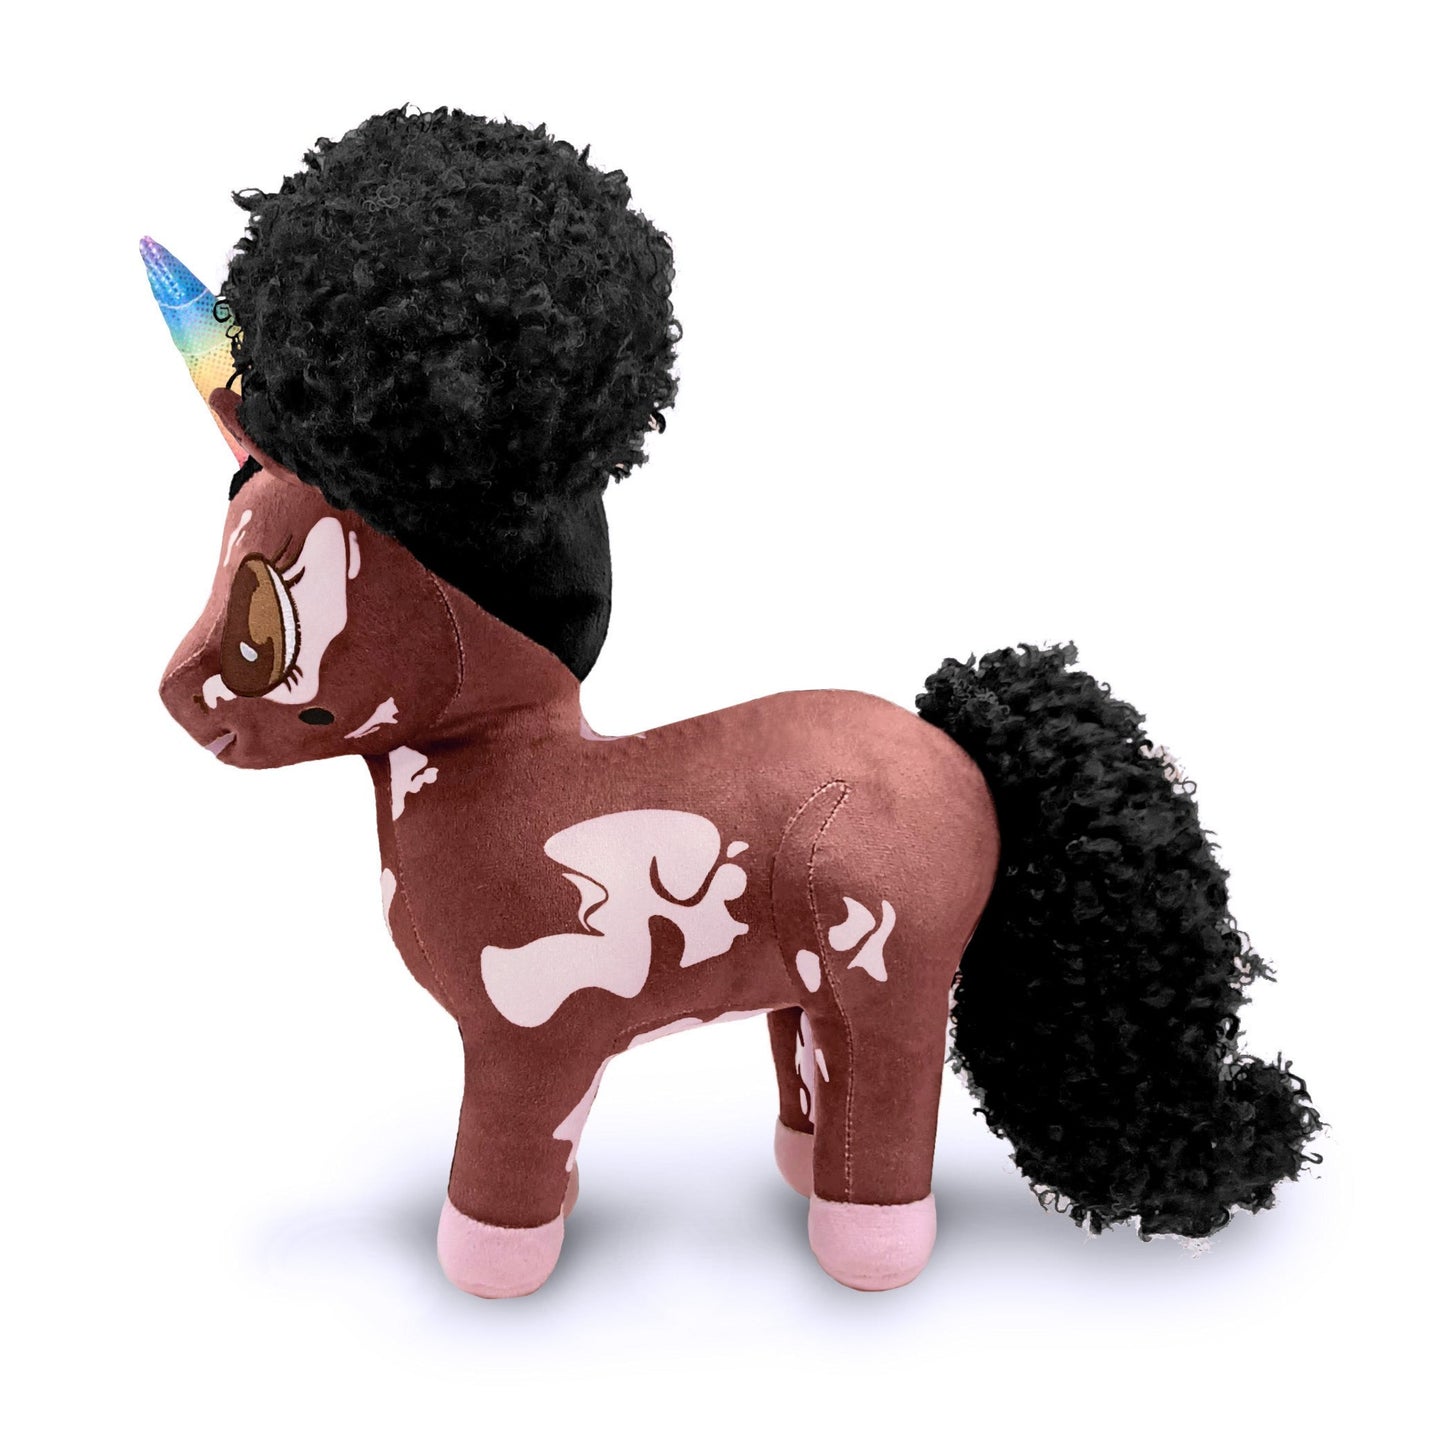 Tianca, Vitiligo Unicorn Plush Toy with Afro Puffs - 15 inch